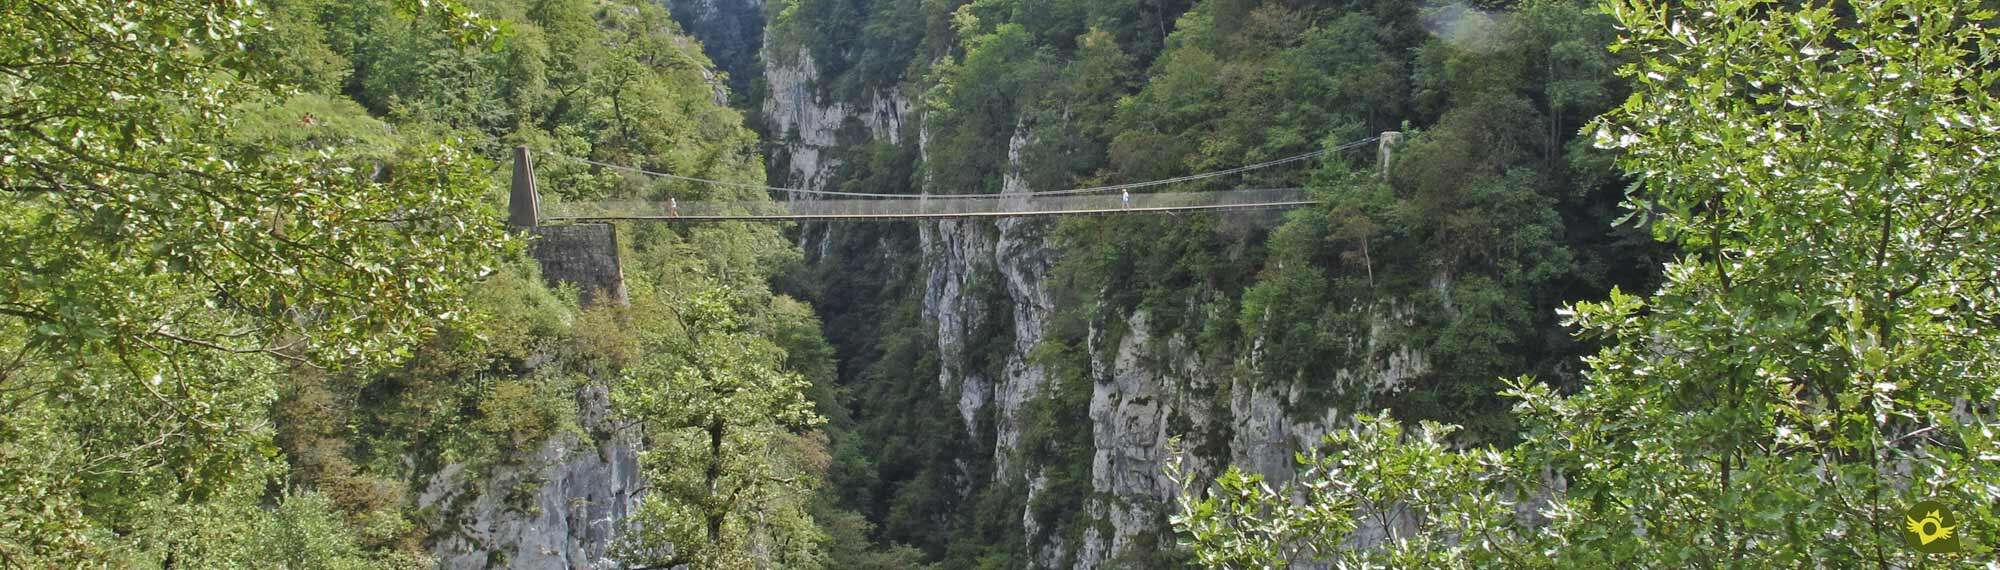 Footbridge of Holzarte